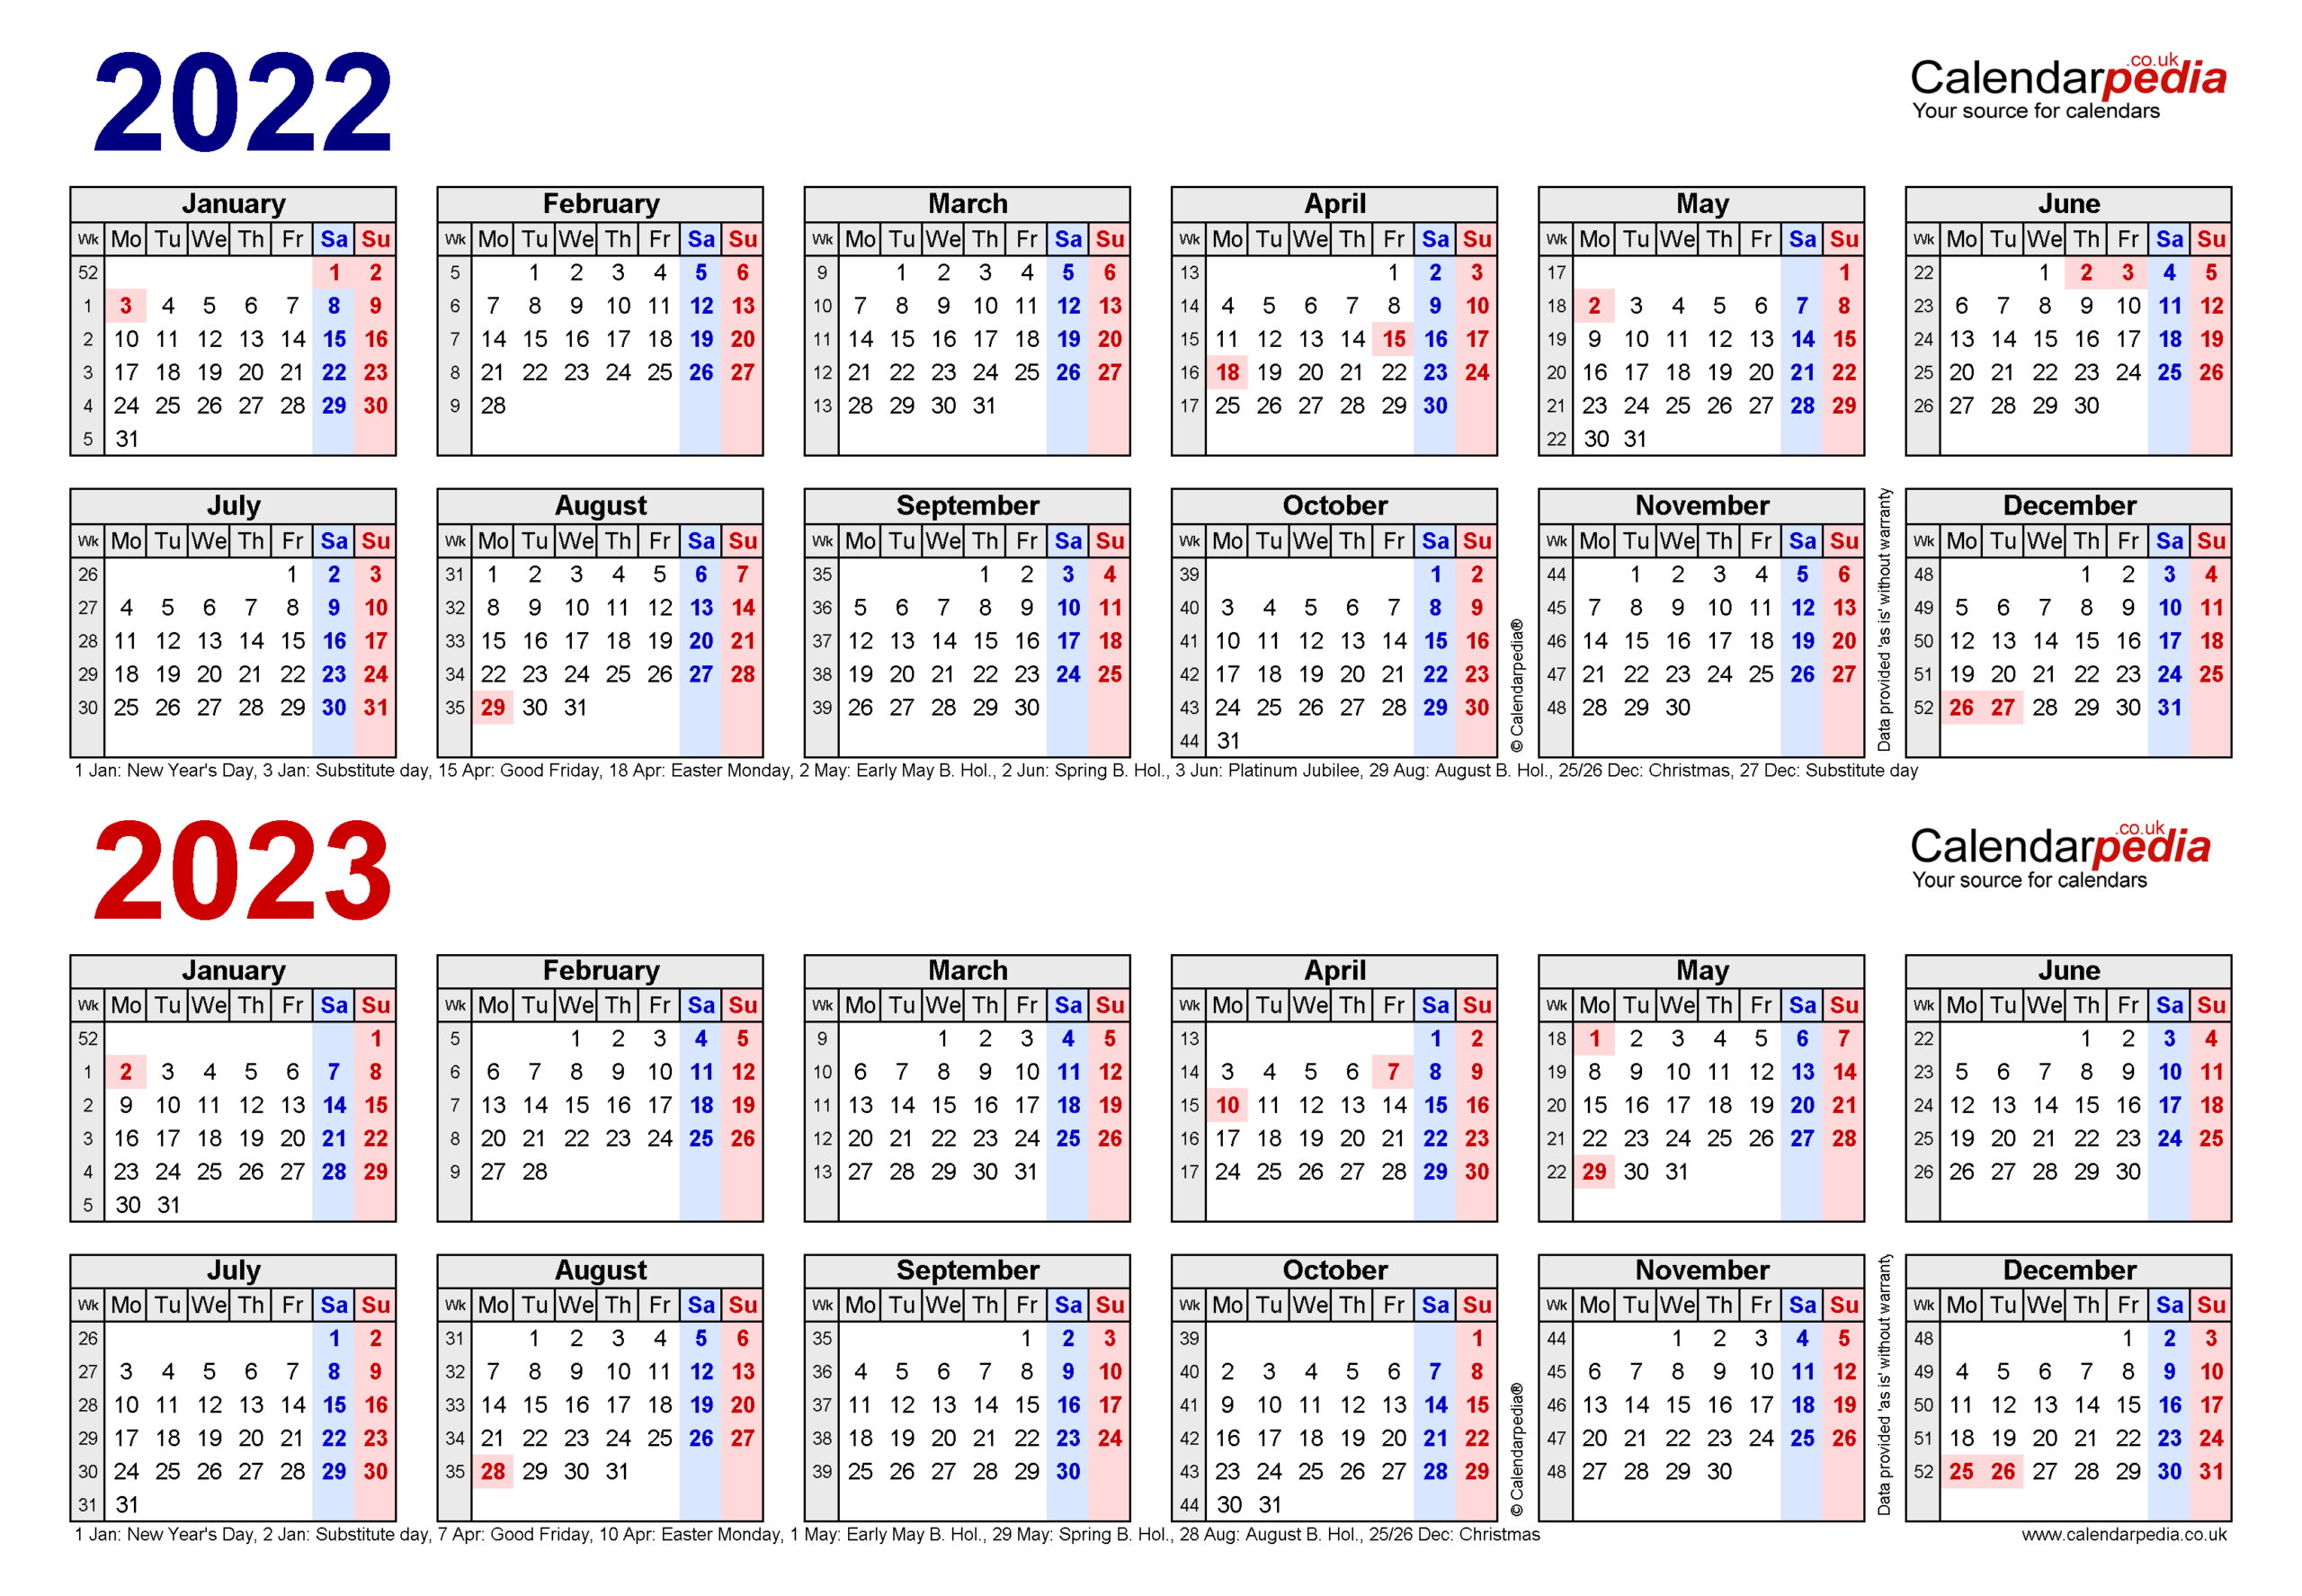 Get Sept 22 2022 Calendar